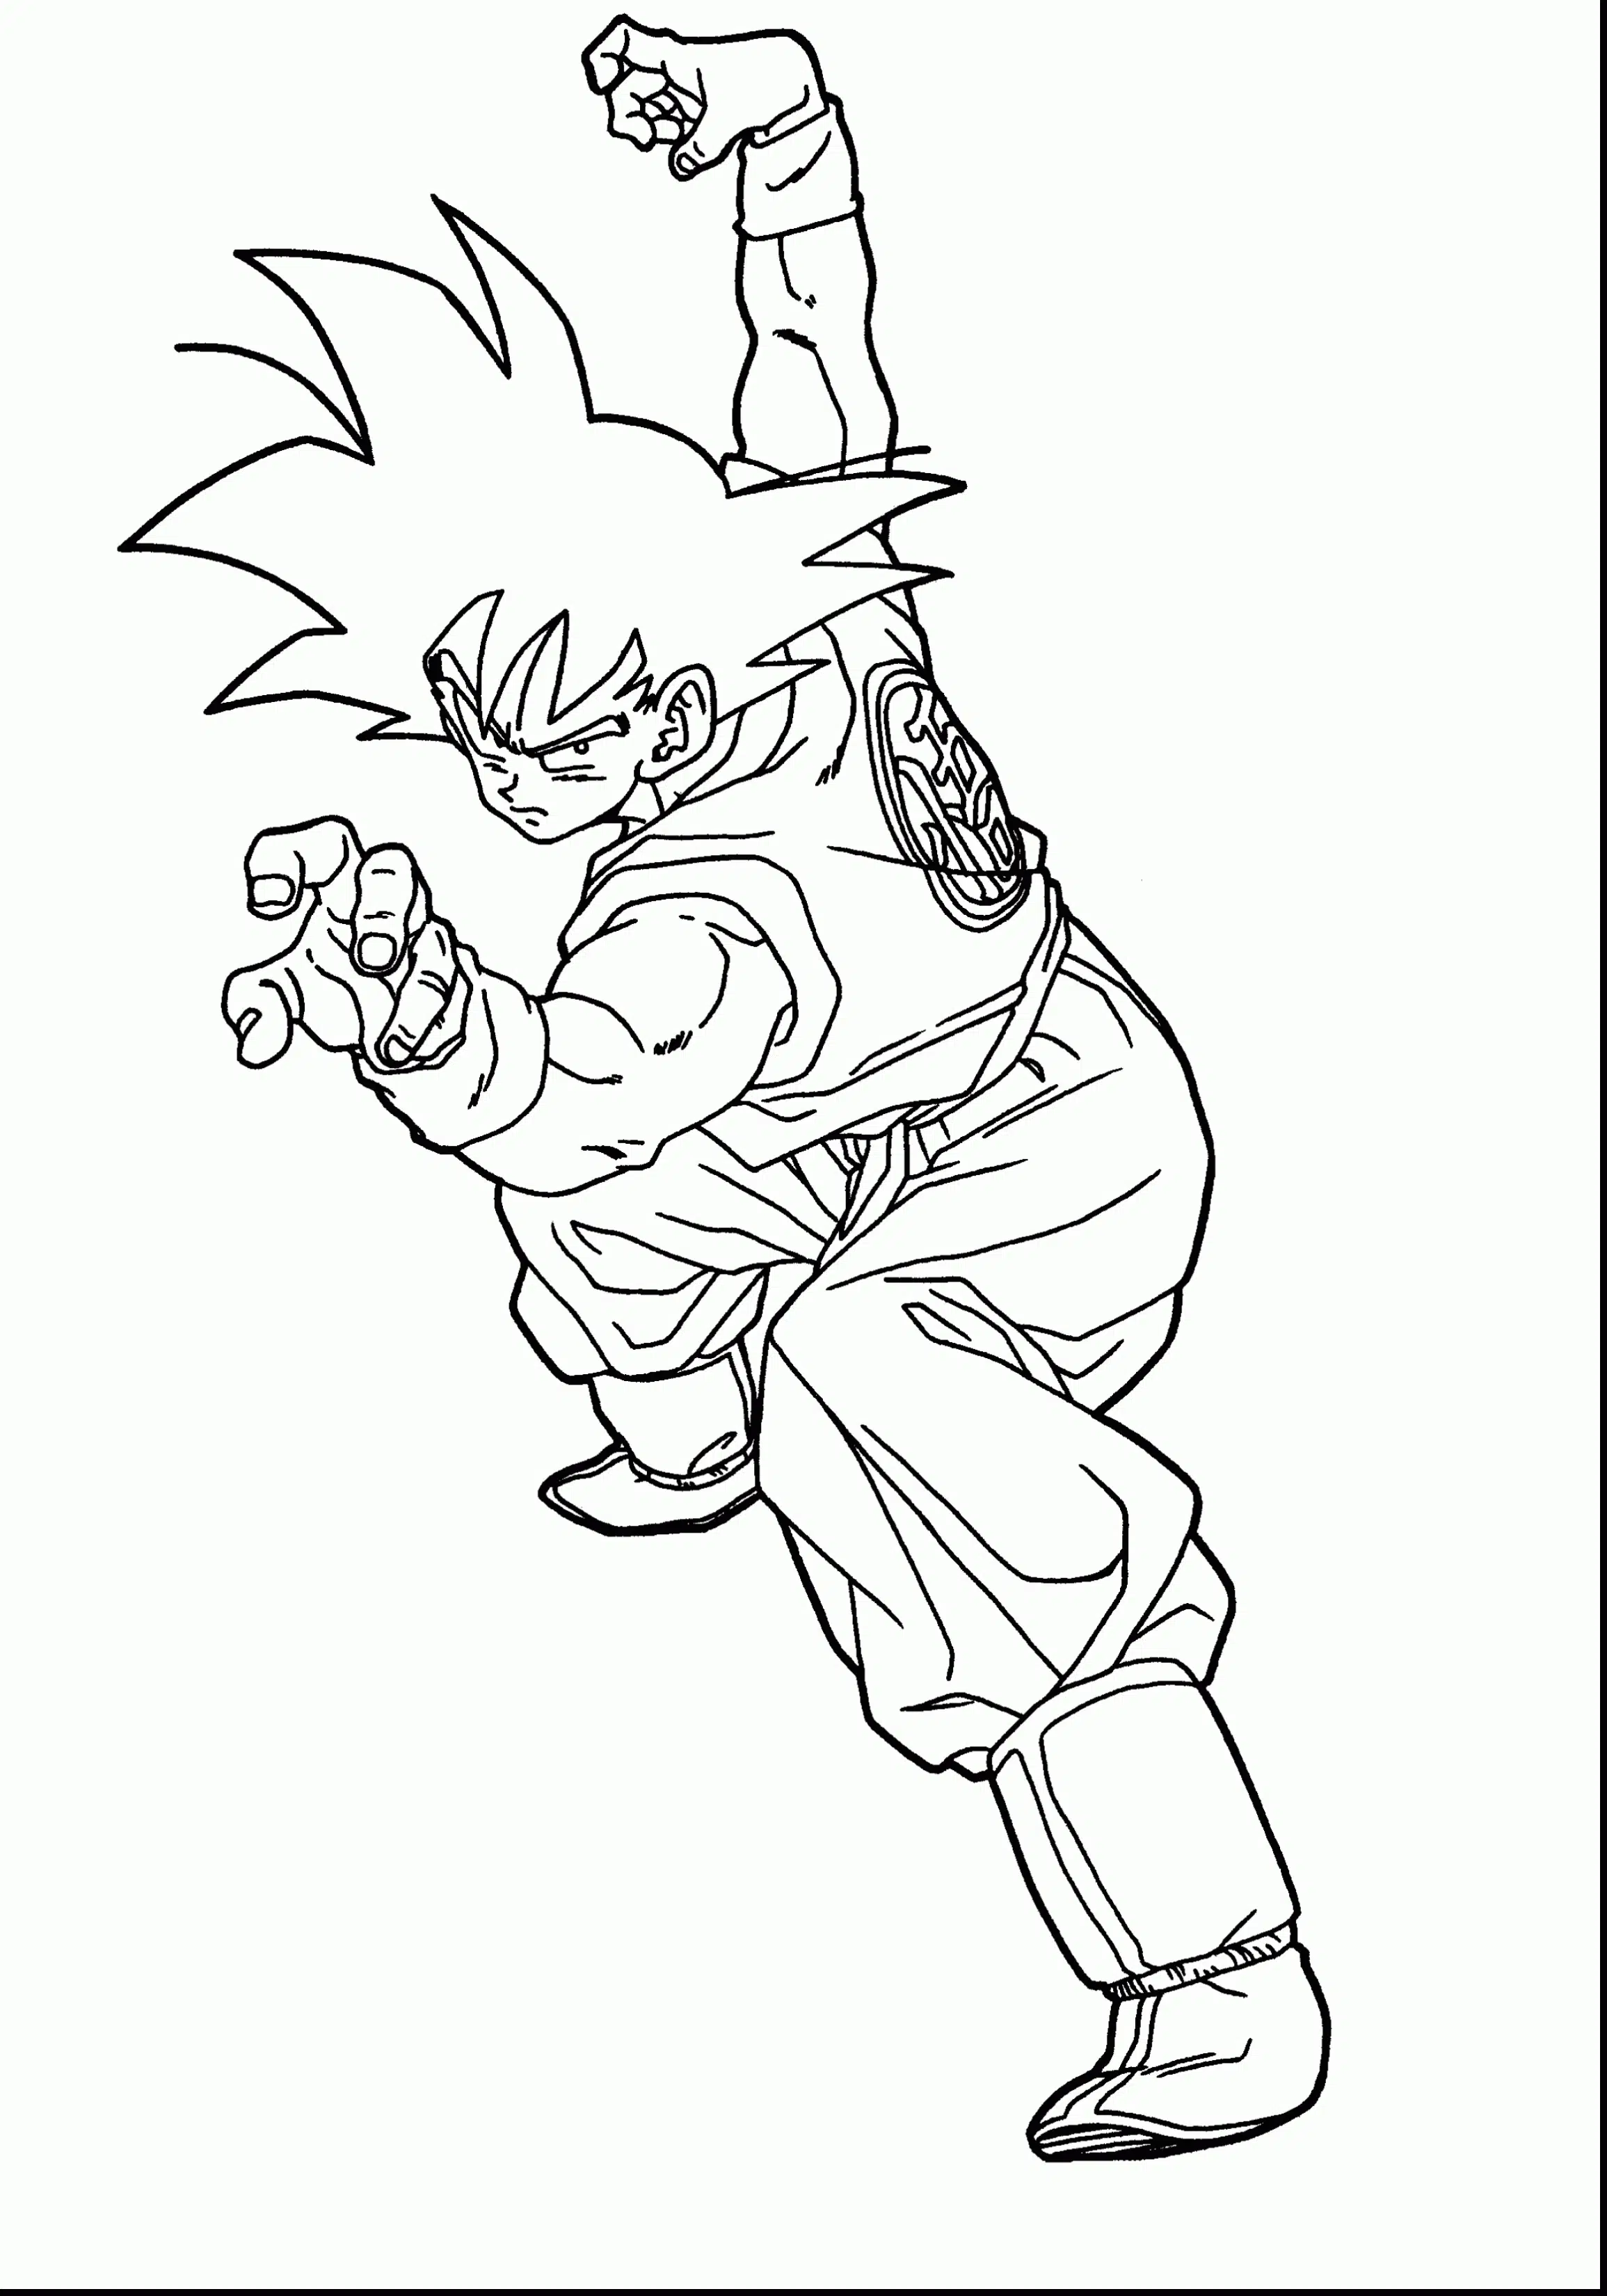 Son Goku 09